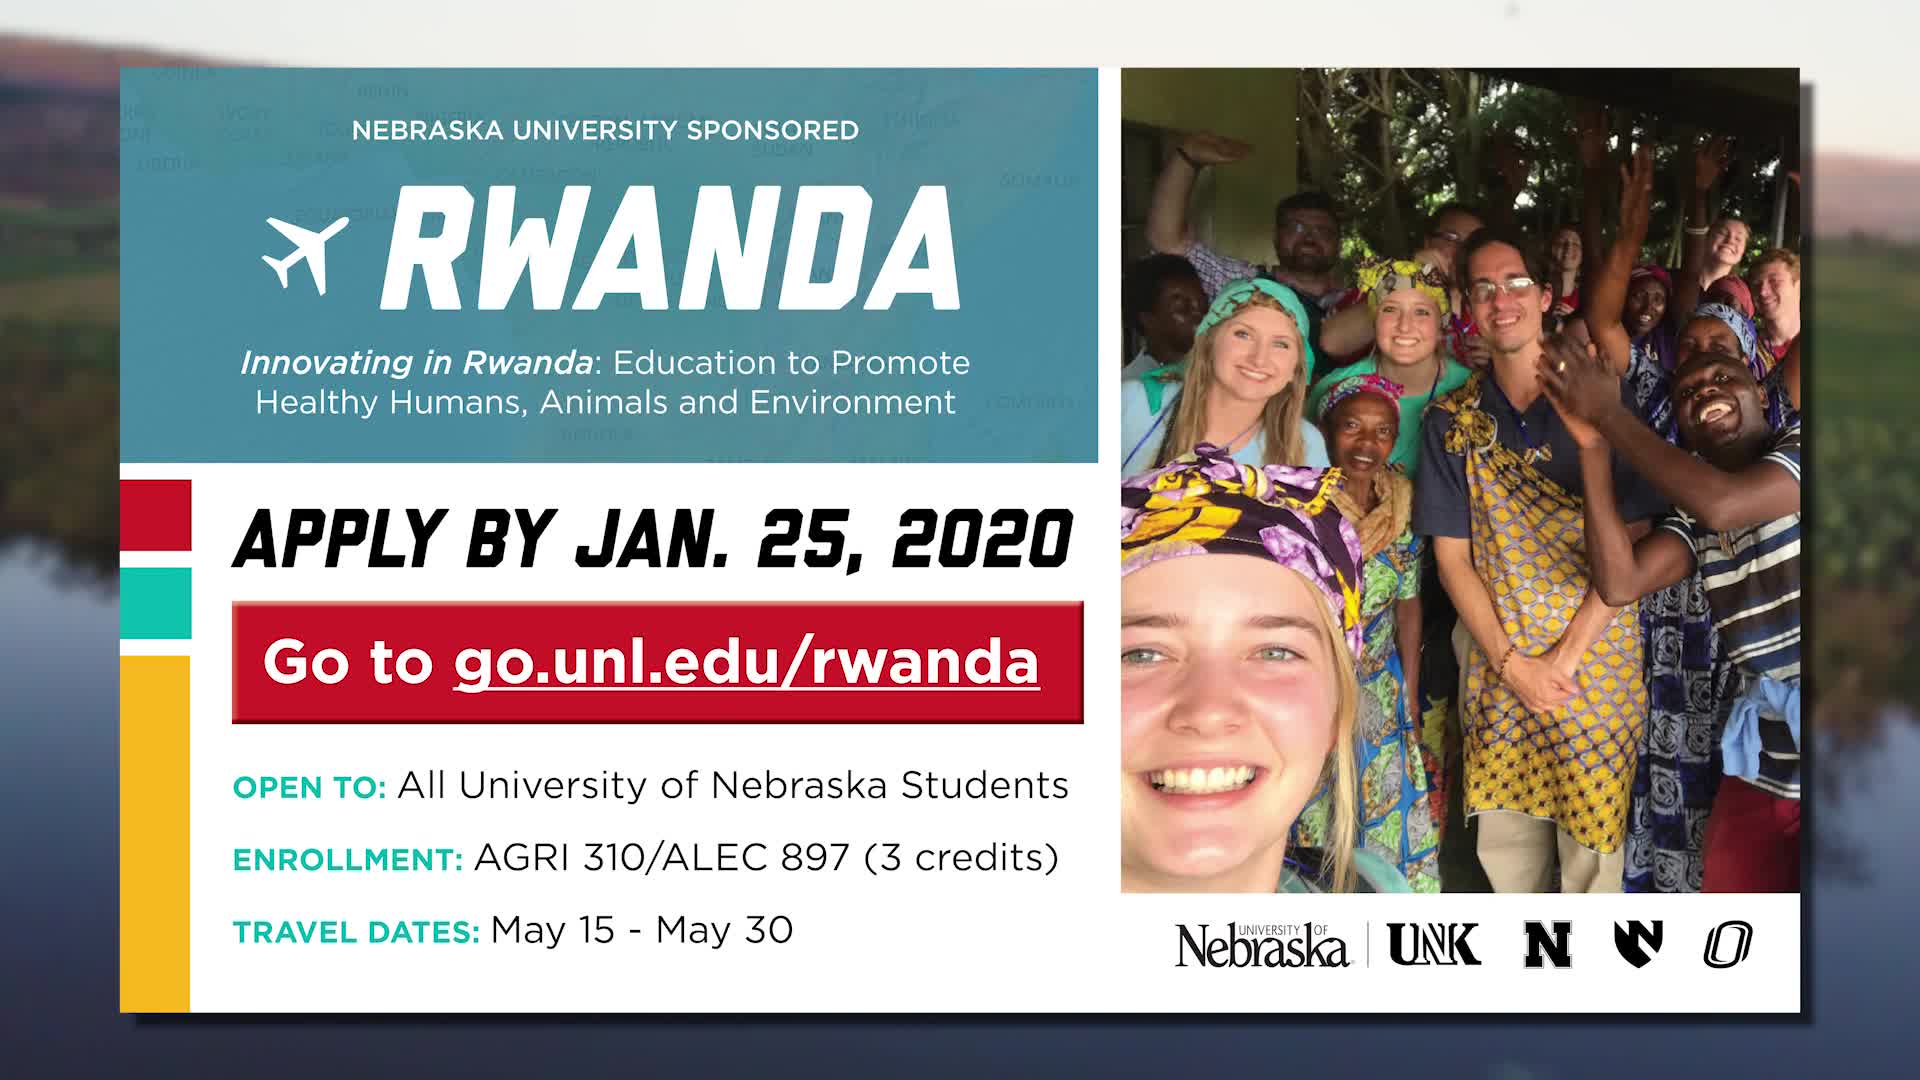 Rwanda 2020: Innovation, Education and the Environment